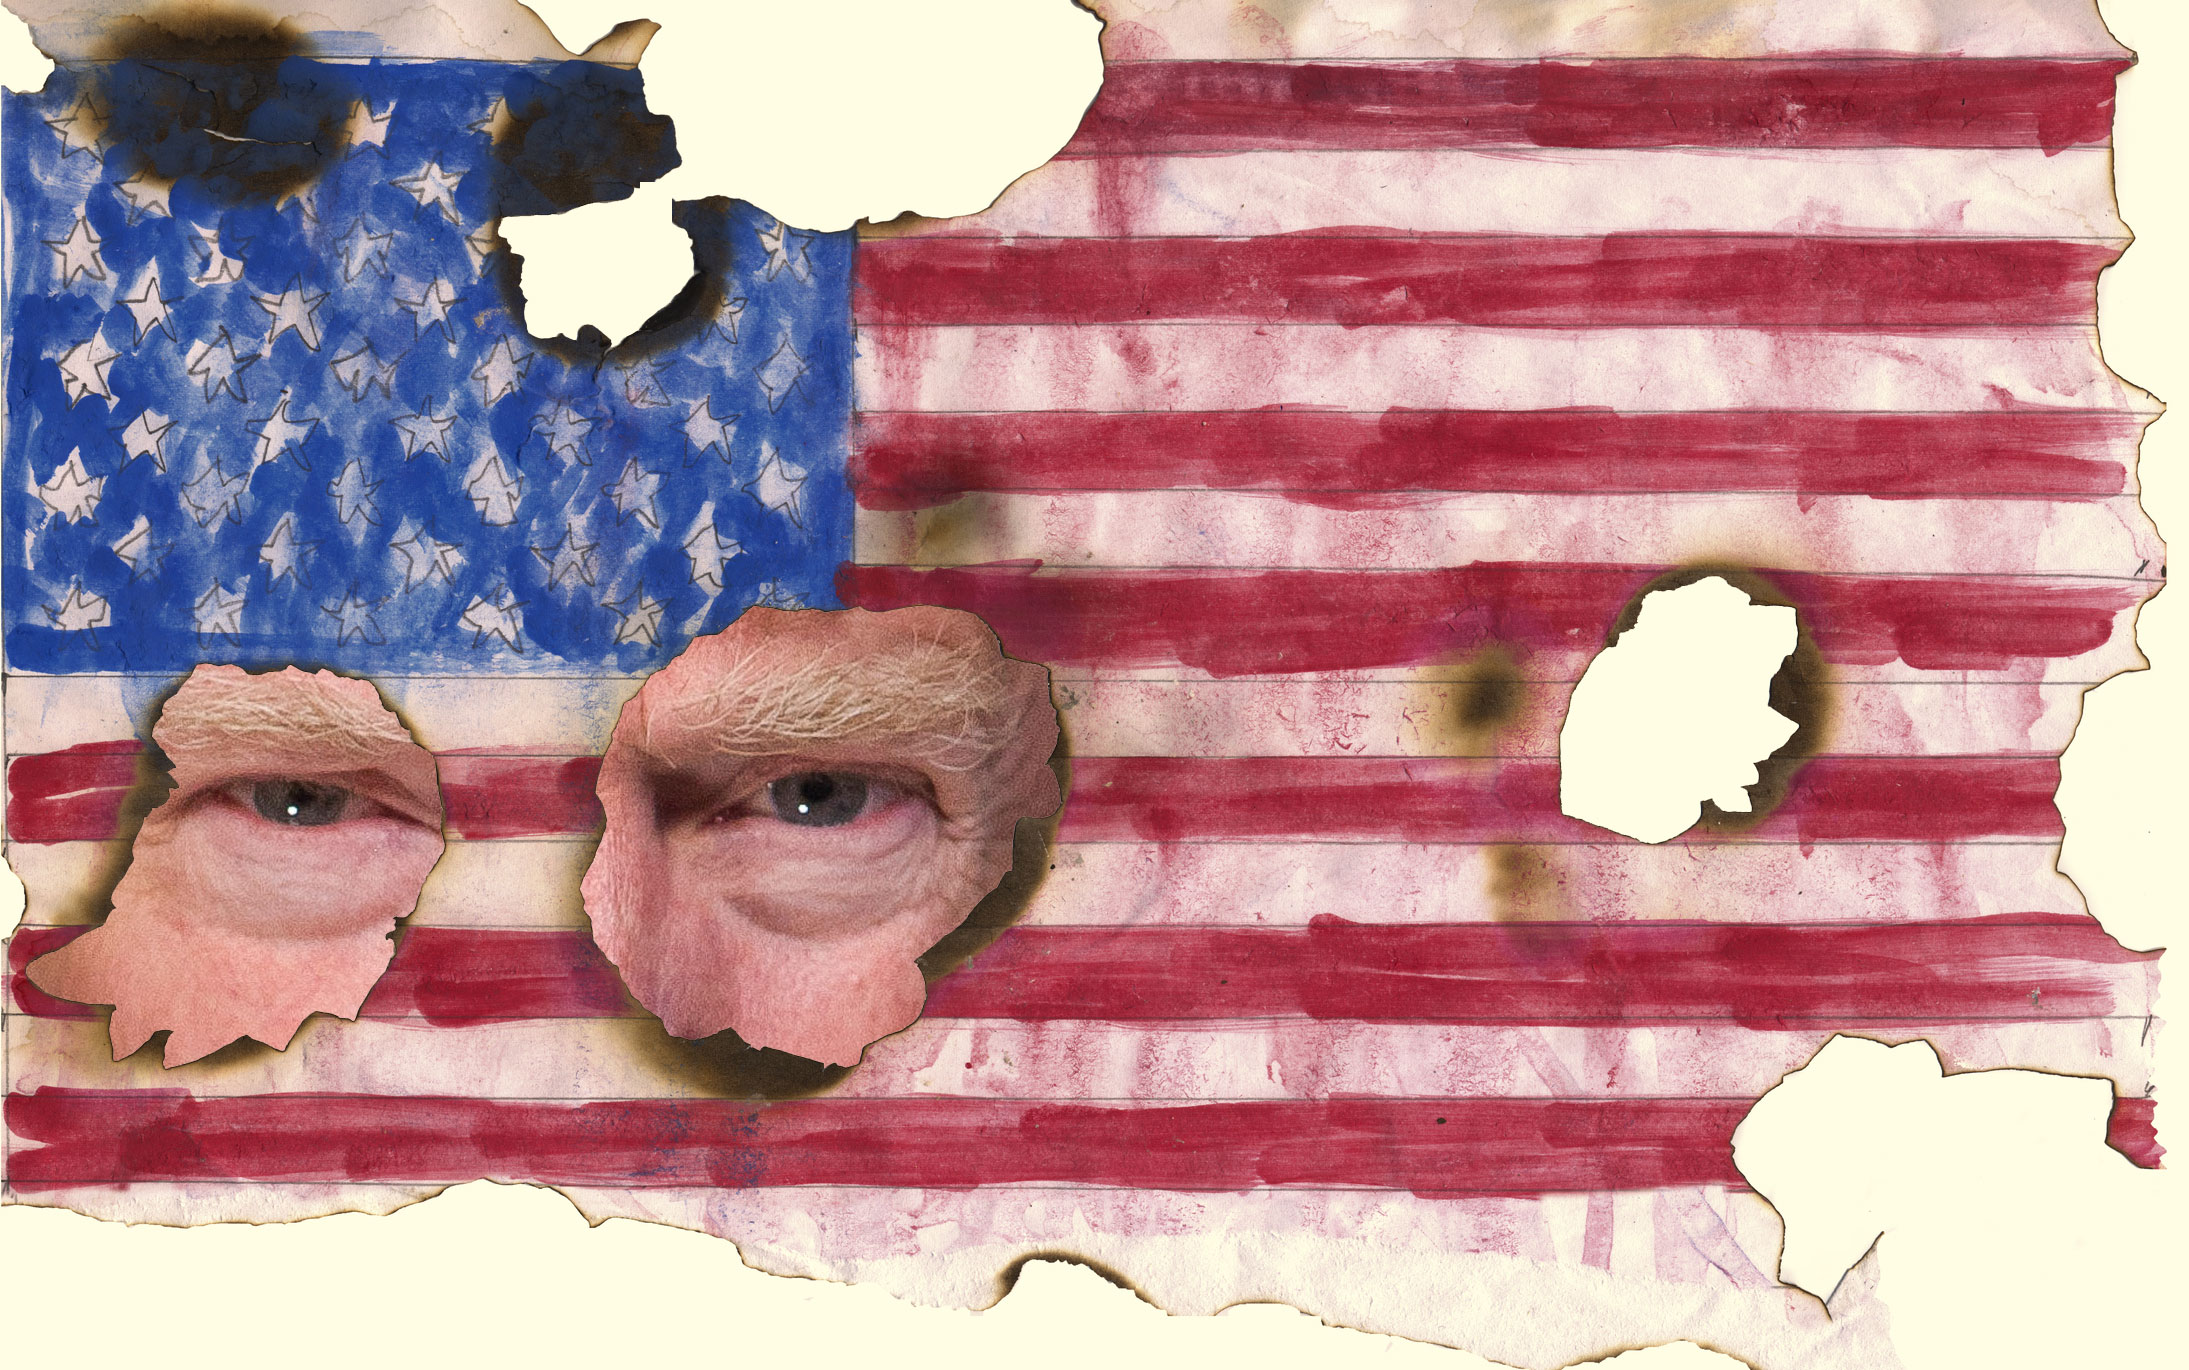 Damaged flag with Trump's eyes peering through holes